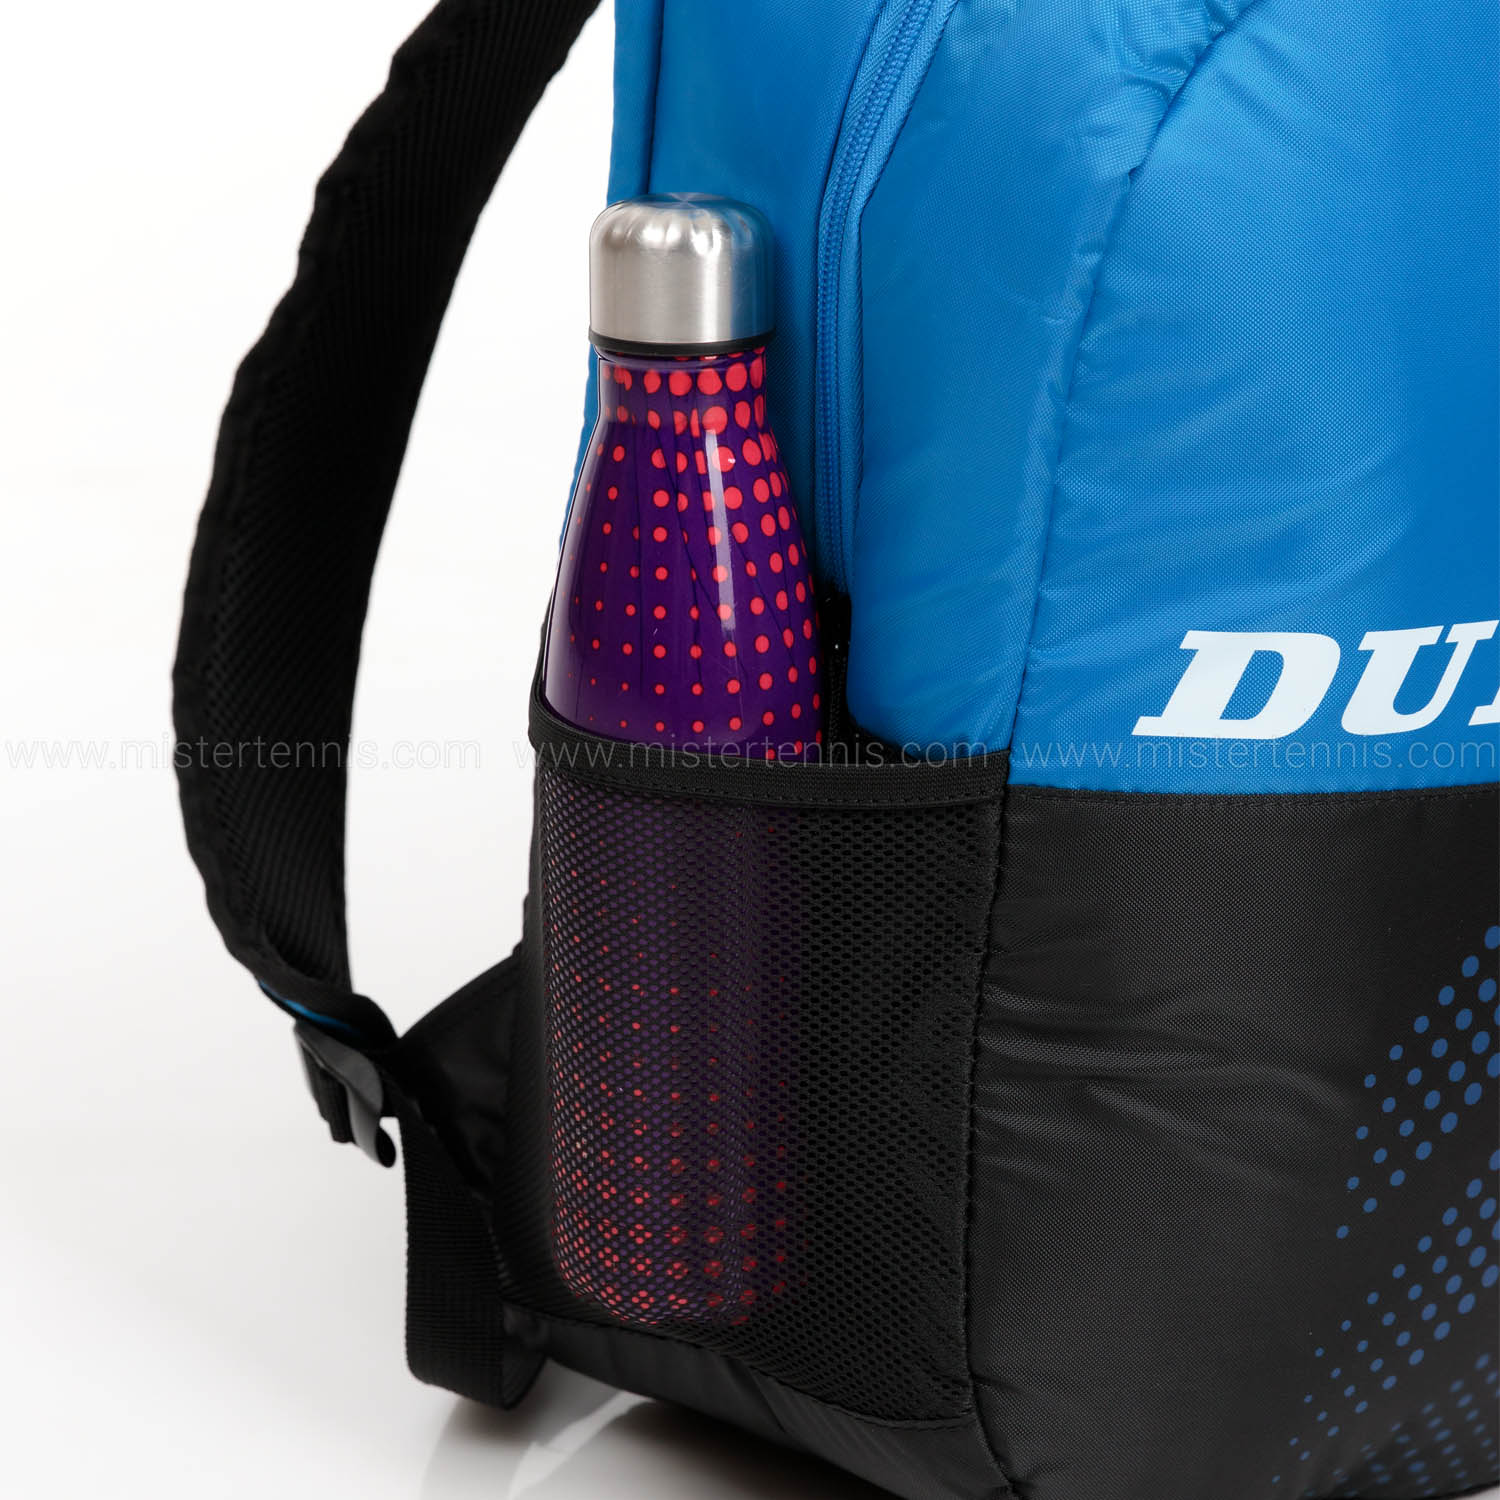 Dunlop CX Club Backpack - Black/Blue